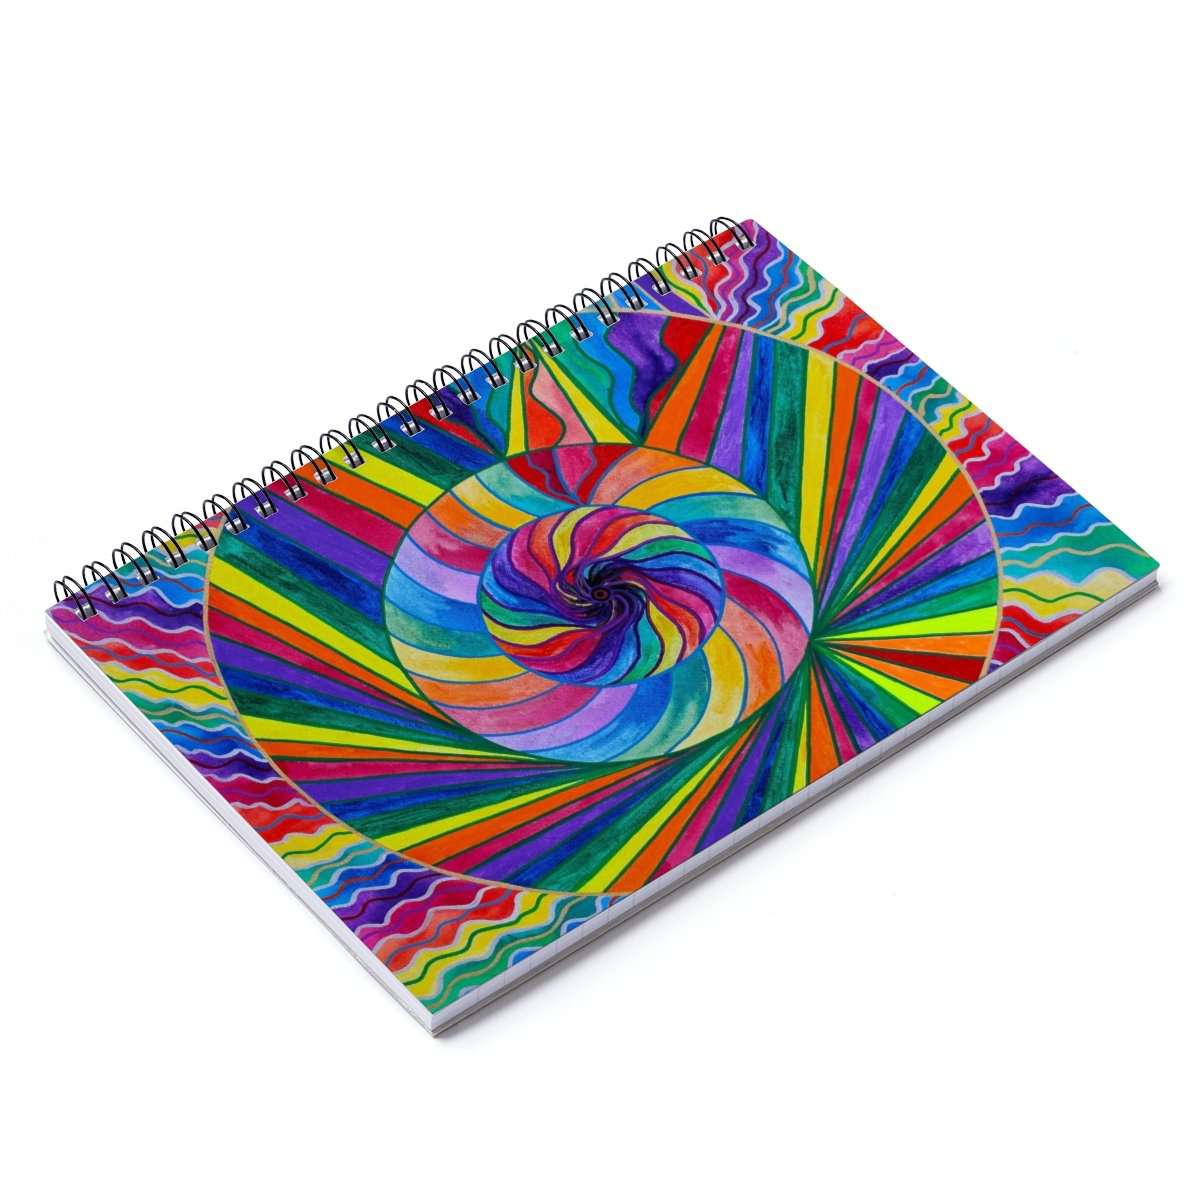 Emerge - Spiral Notebook